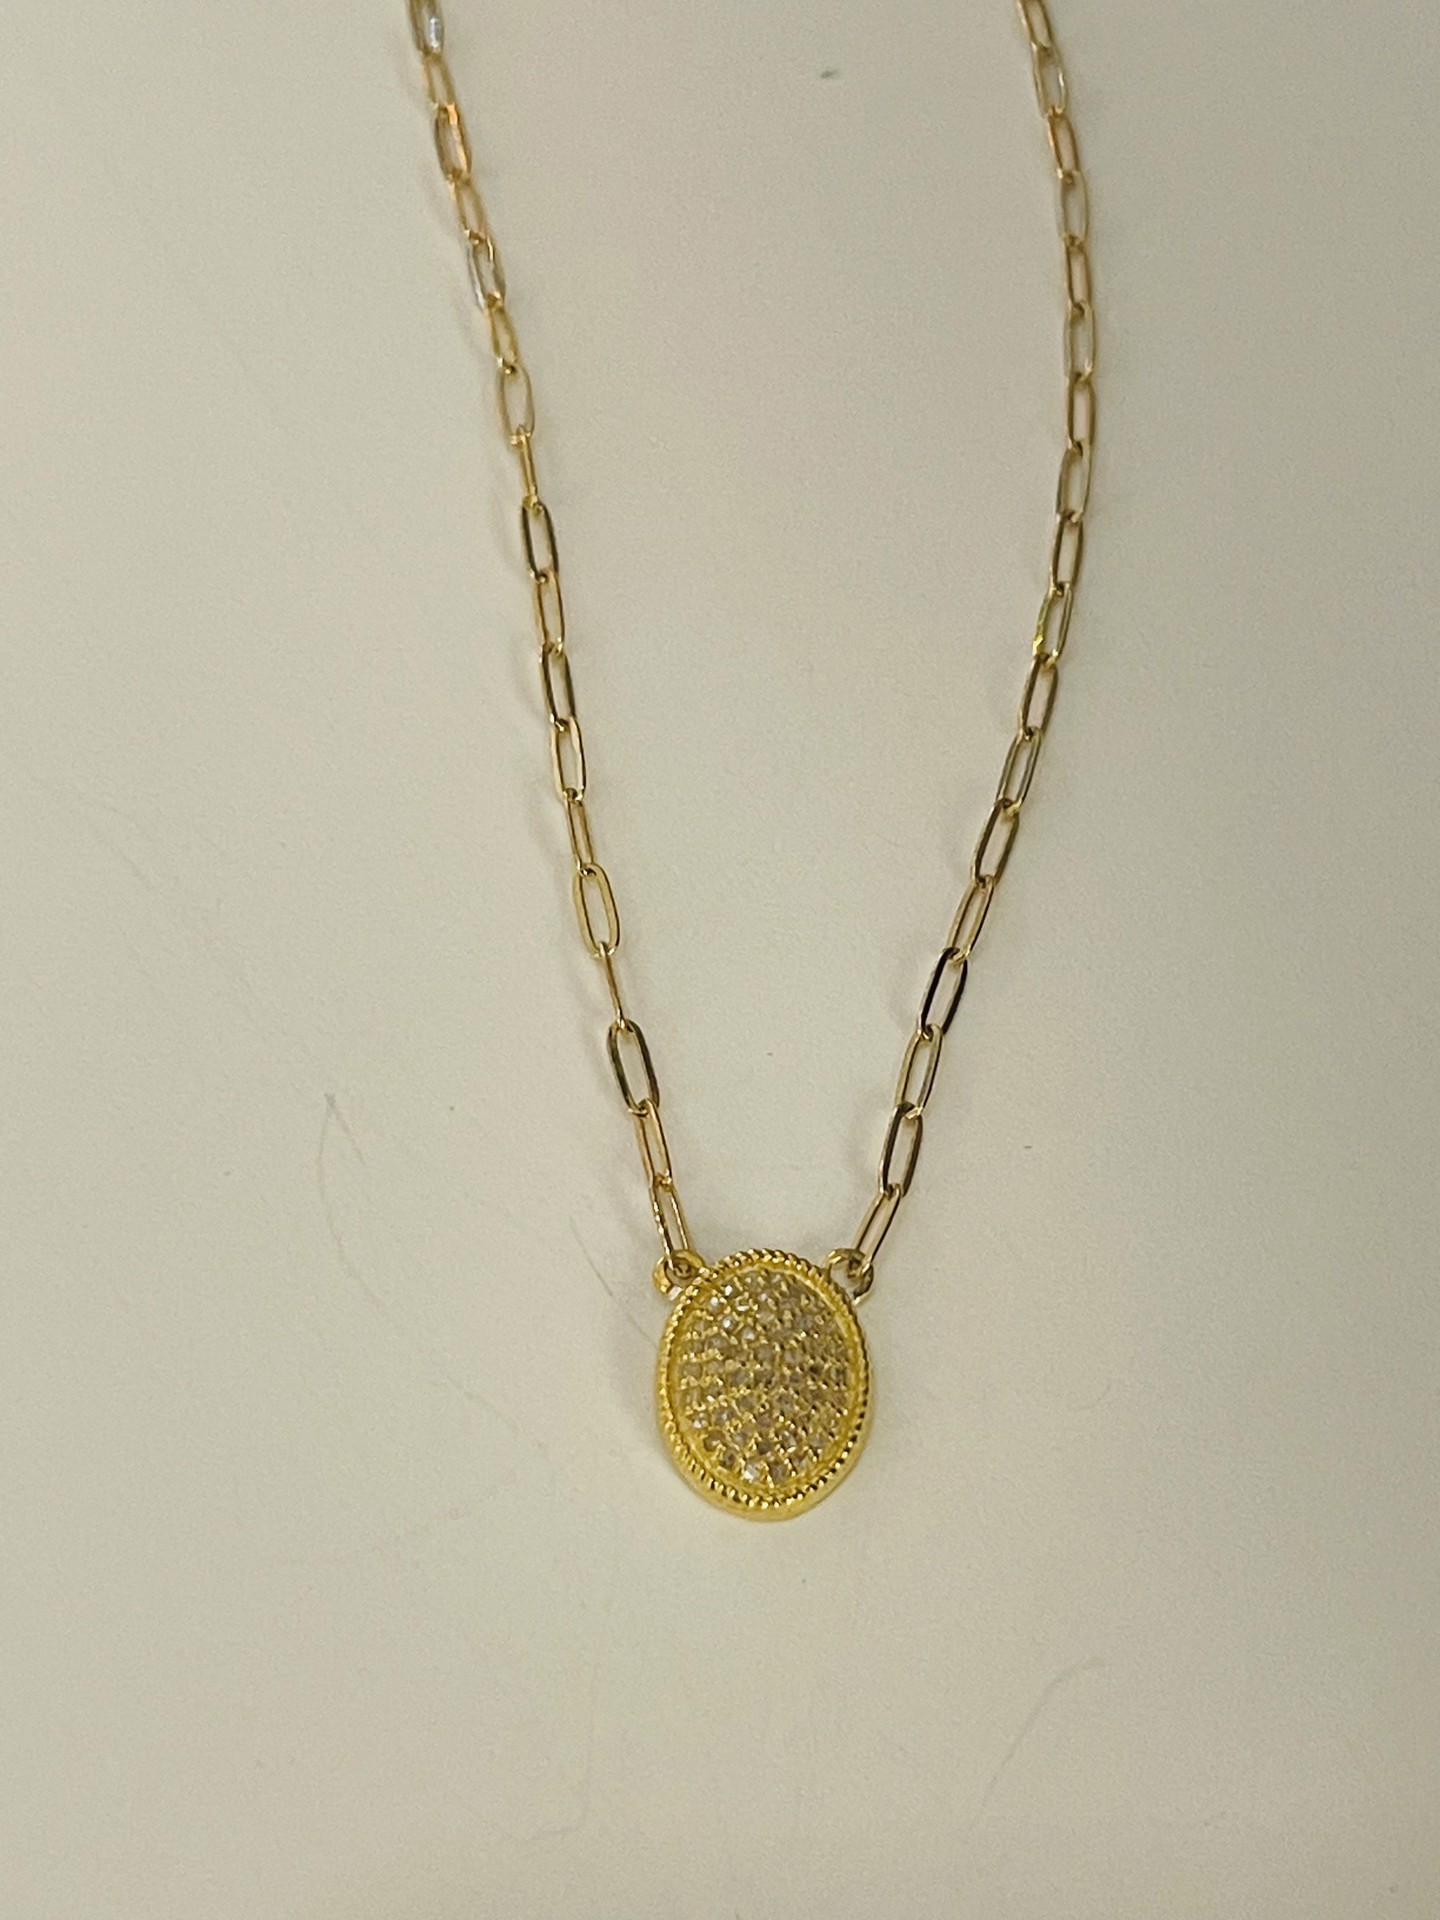 Gold Pave Diamond Oval Necklace by Karen Birchmier | ArtCloud